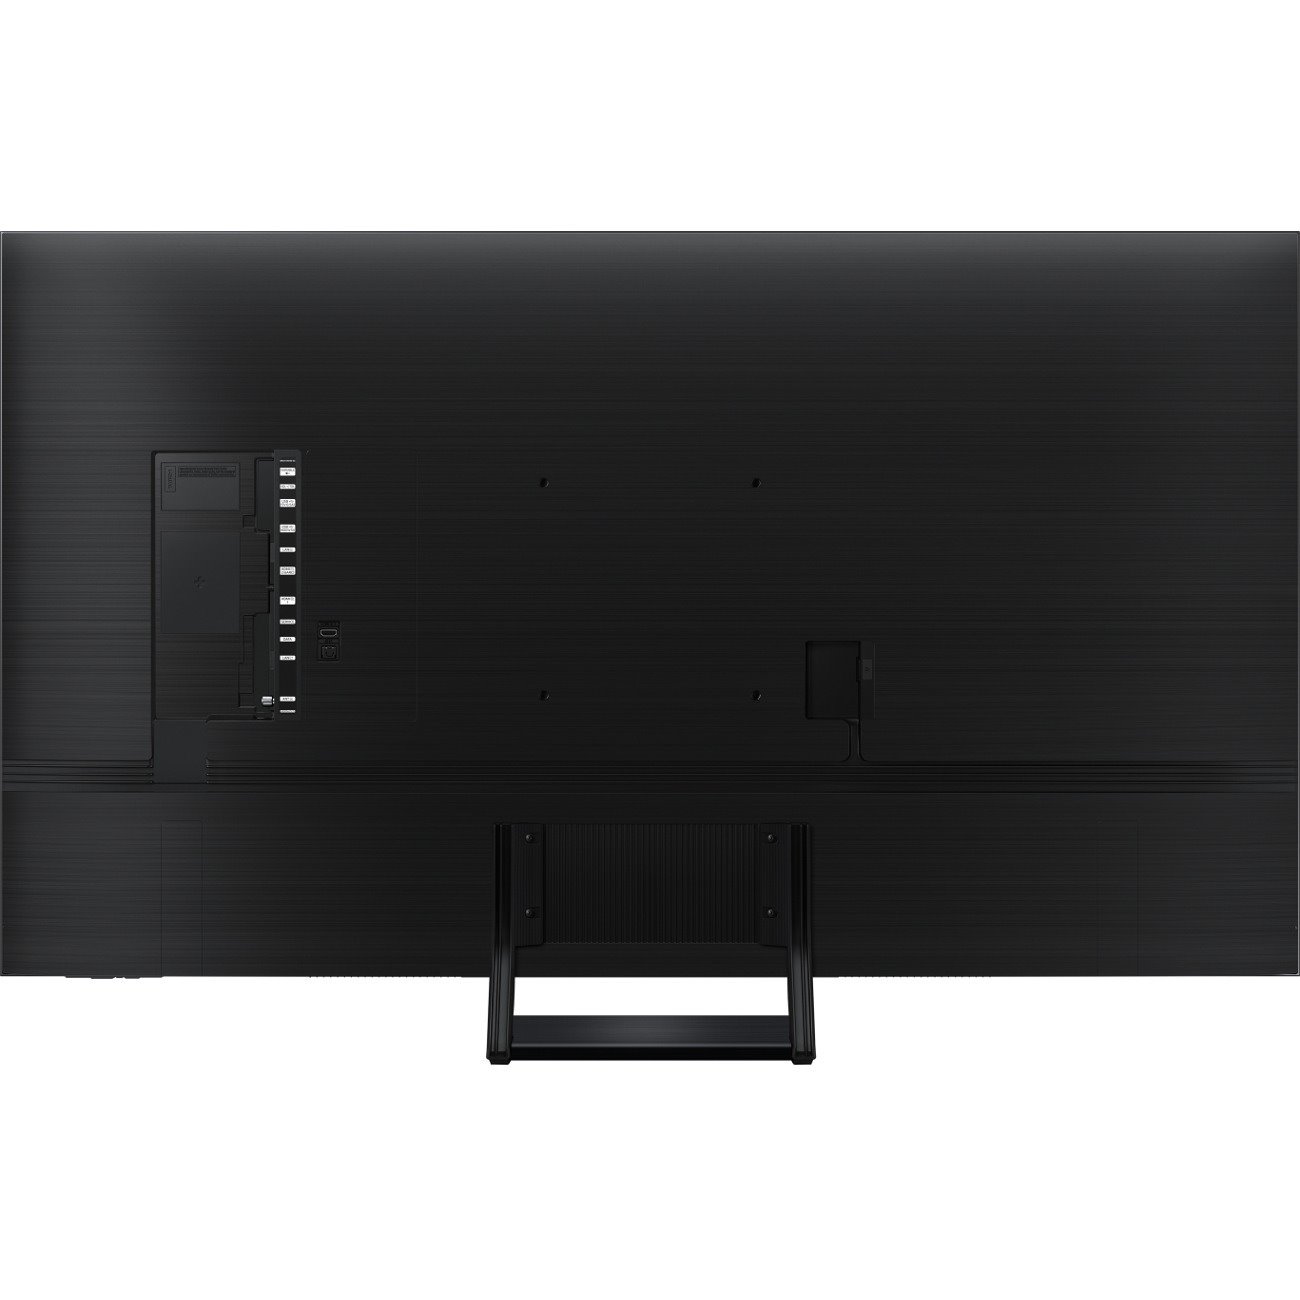 Samsung HQ60A HG55Q60AAAW 139.7 cm Smart LED-LCD TV - 4K UHDTV - Black